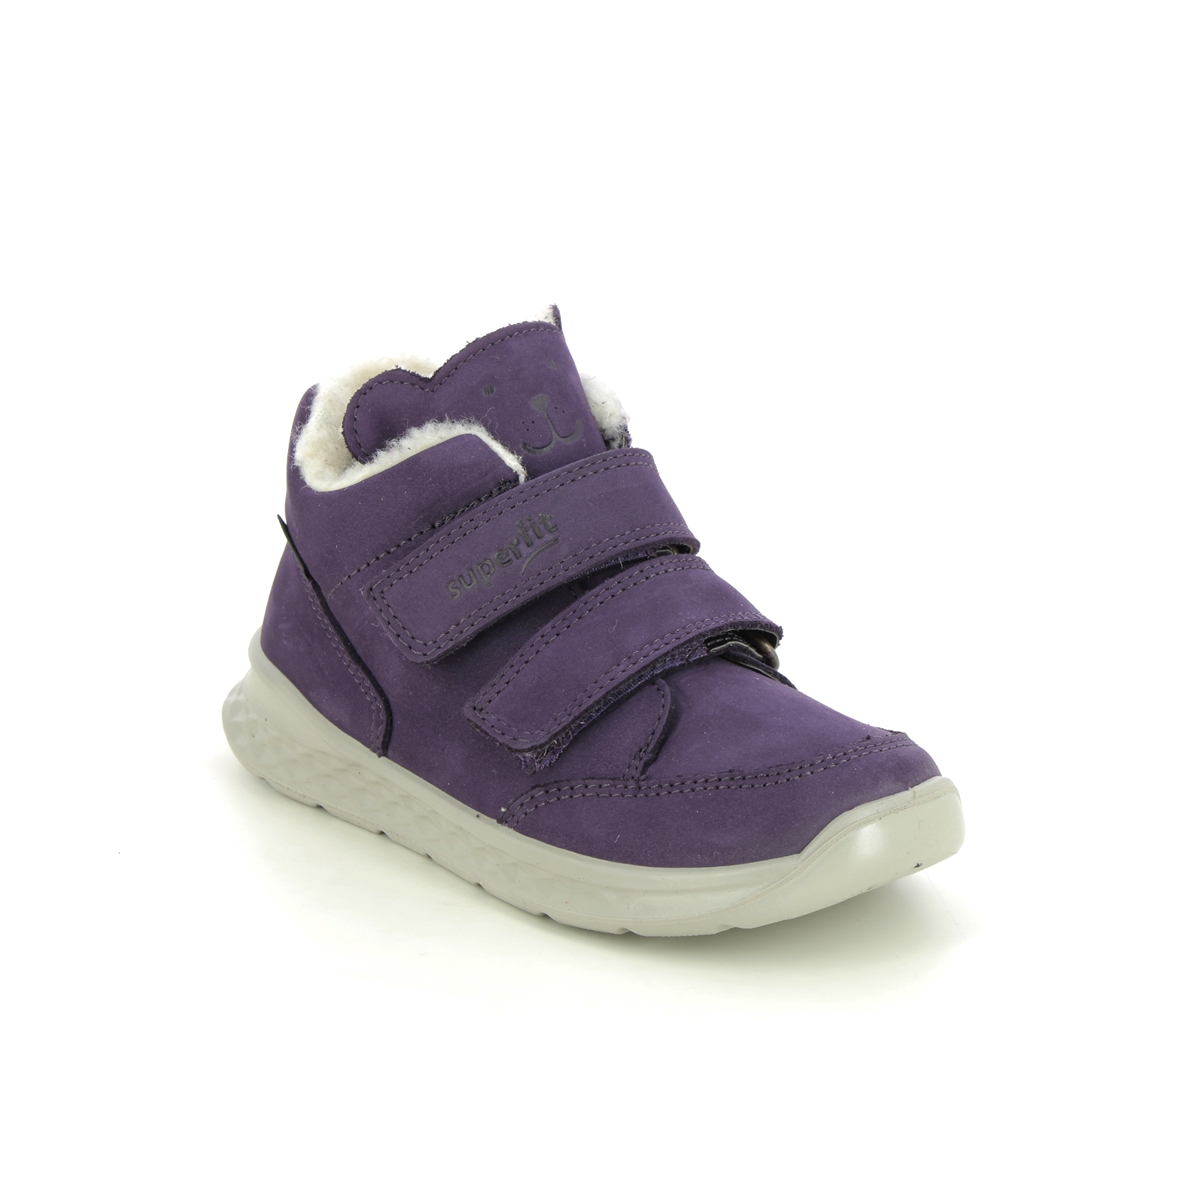 Superfit Breeze 2V Gtx Purple Nubuck Kids Toddler Girls Boots 1000372-8500 In Size 27 In Plain Purple Nubuck